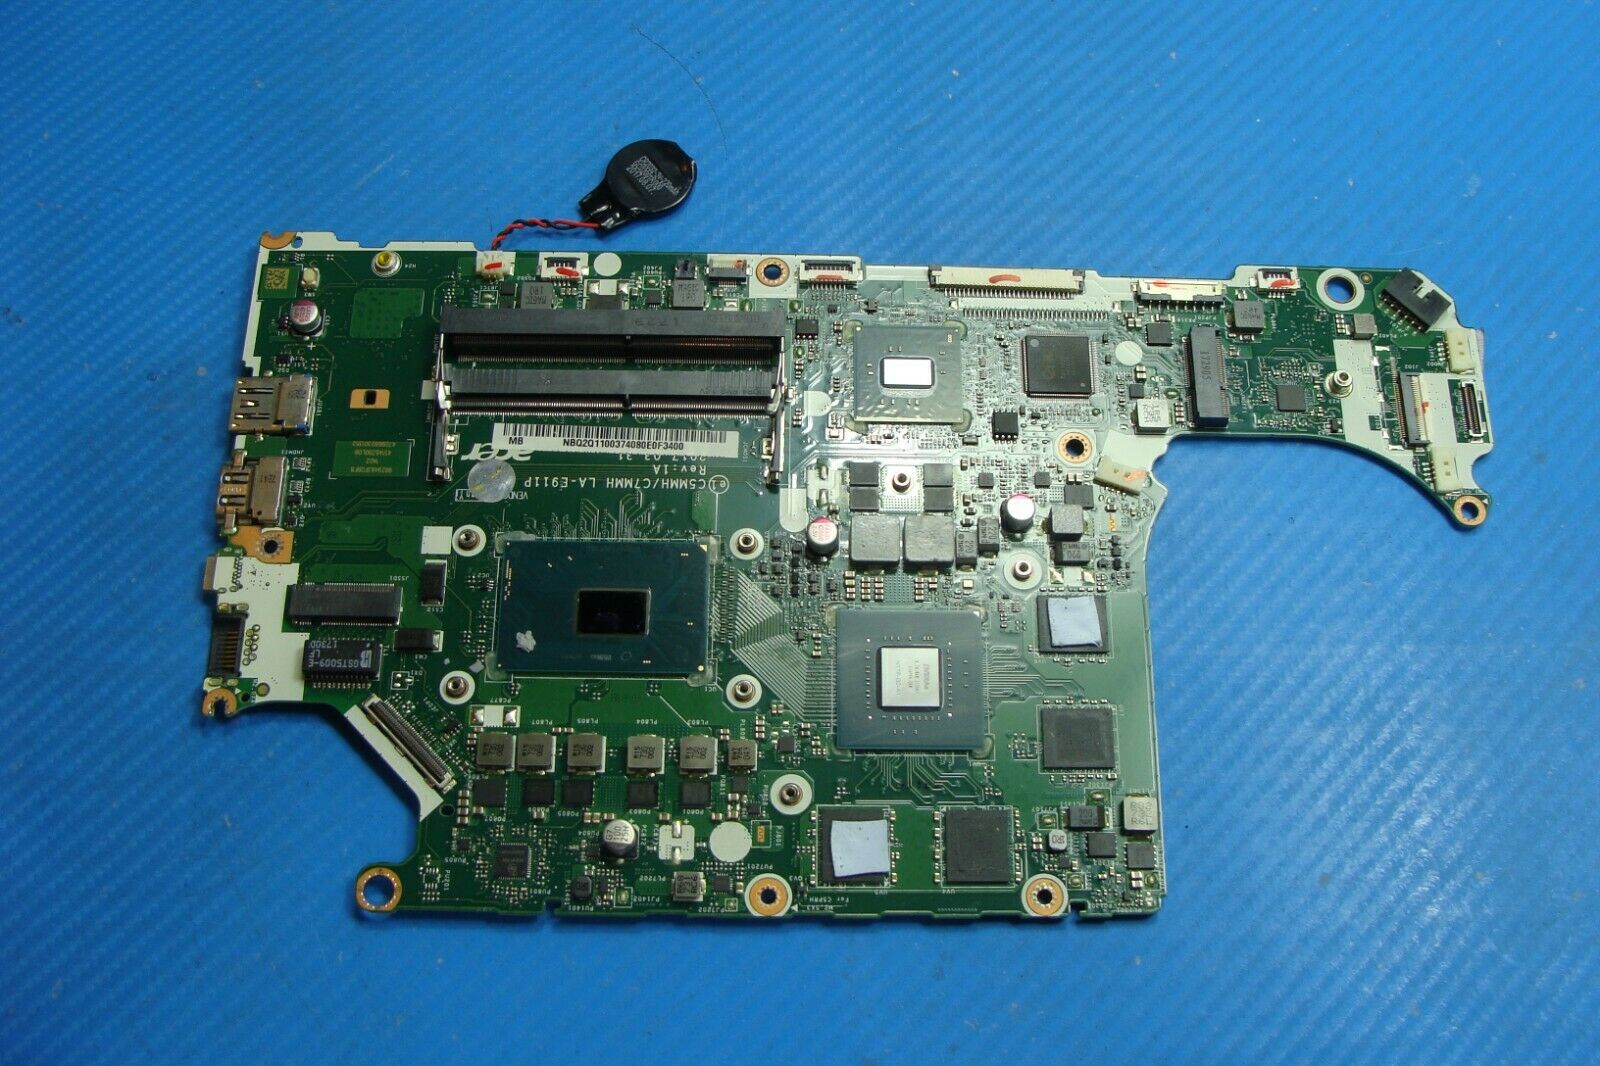  Acer Nitro 5, 7th Gen Intel Core i5-7300HQ, GeForce